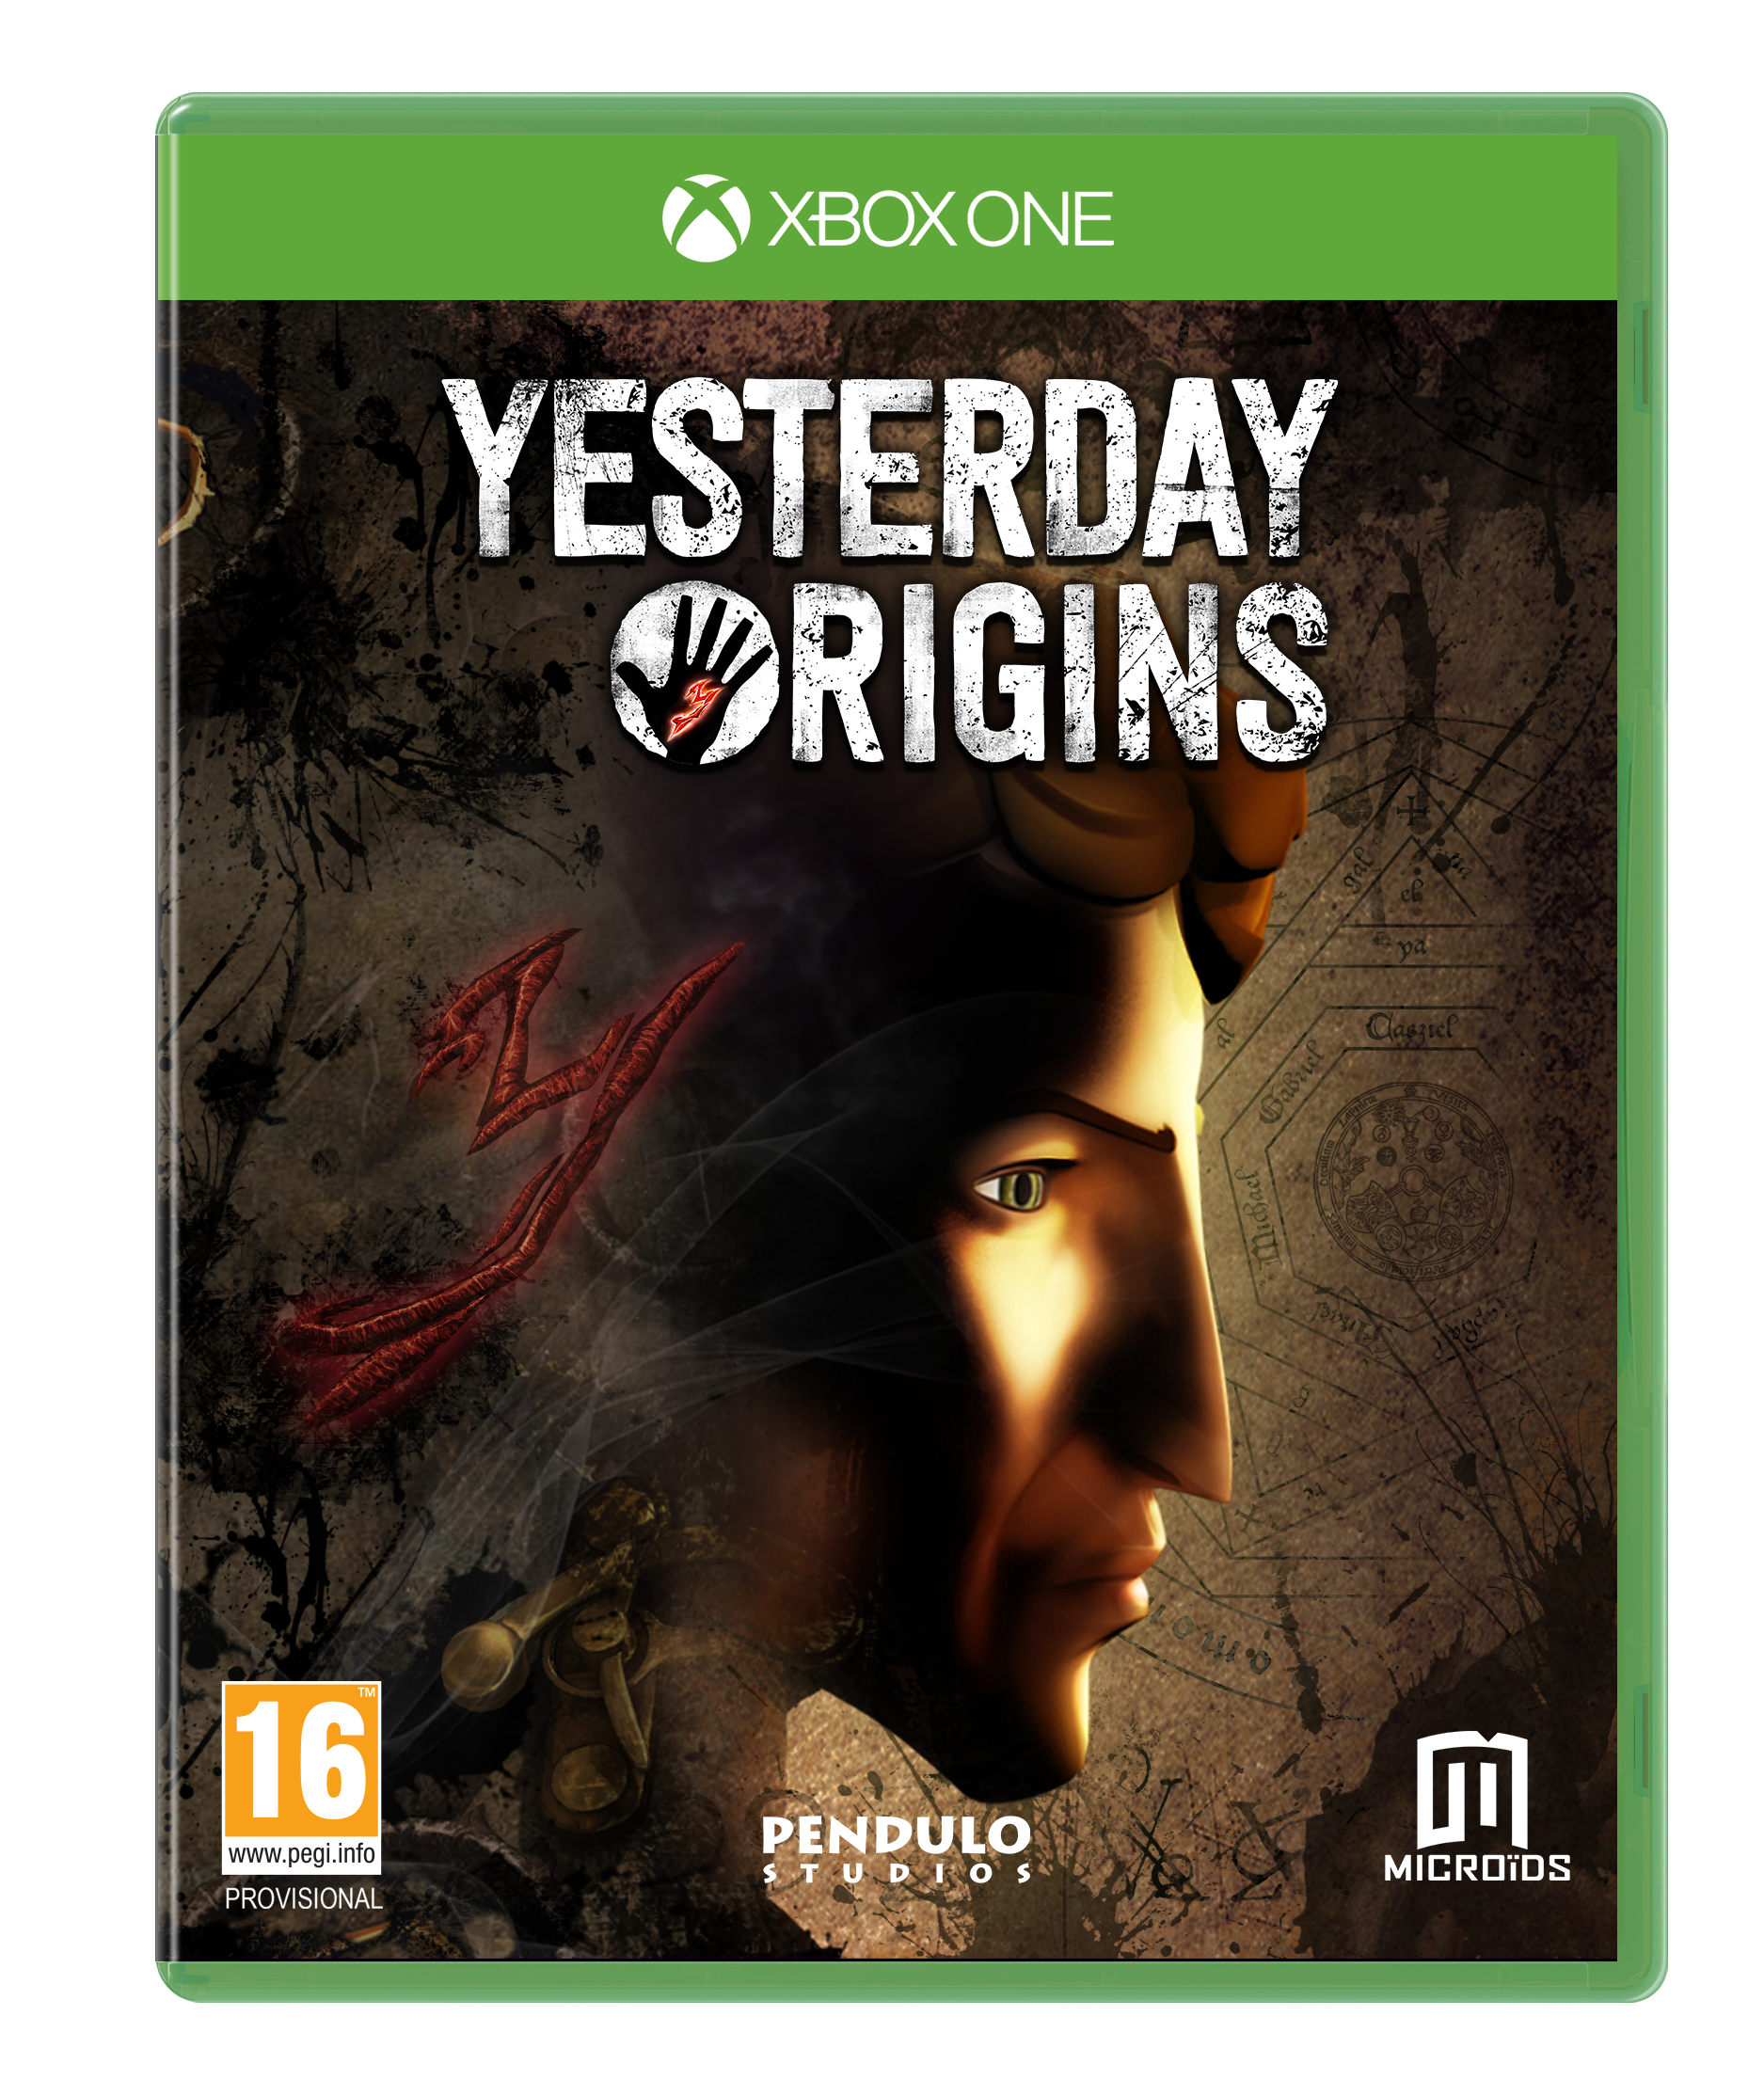 They play games yesterday. Yesterday игра. Yesterday Origins. Игра yesterday Origins. Xbox one yesterday Origins.